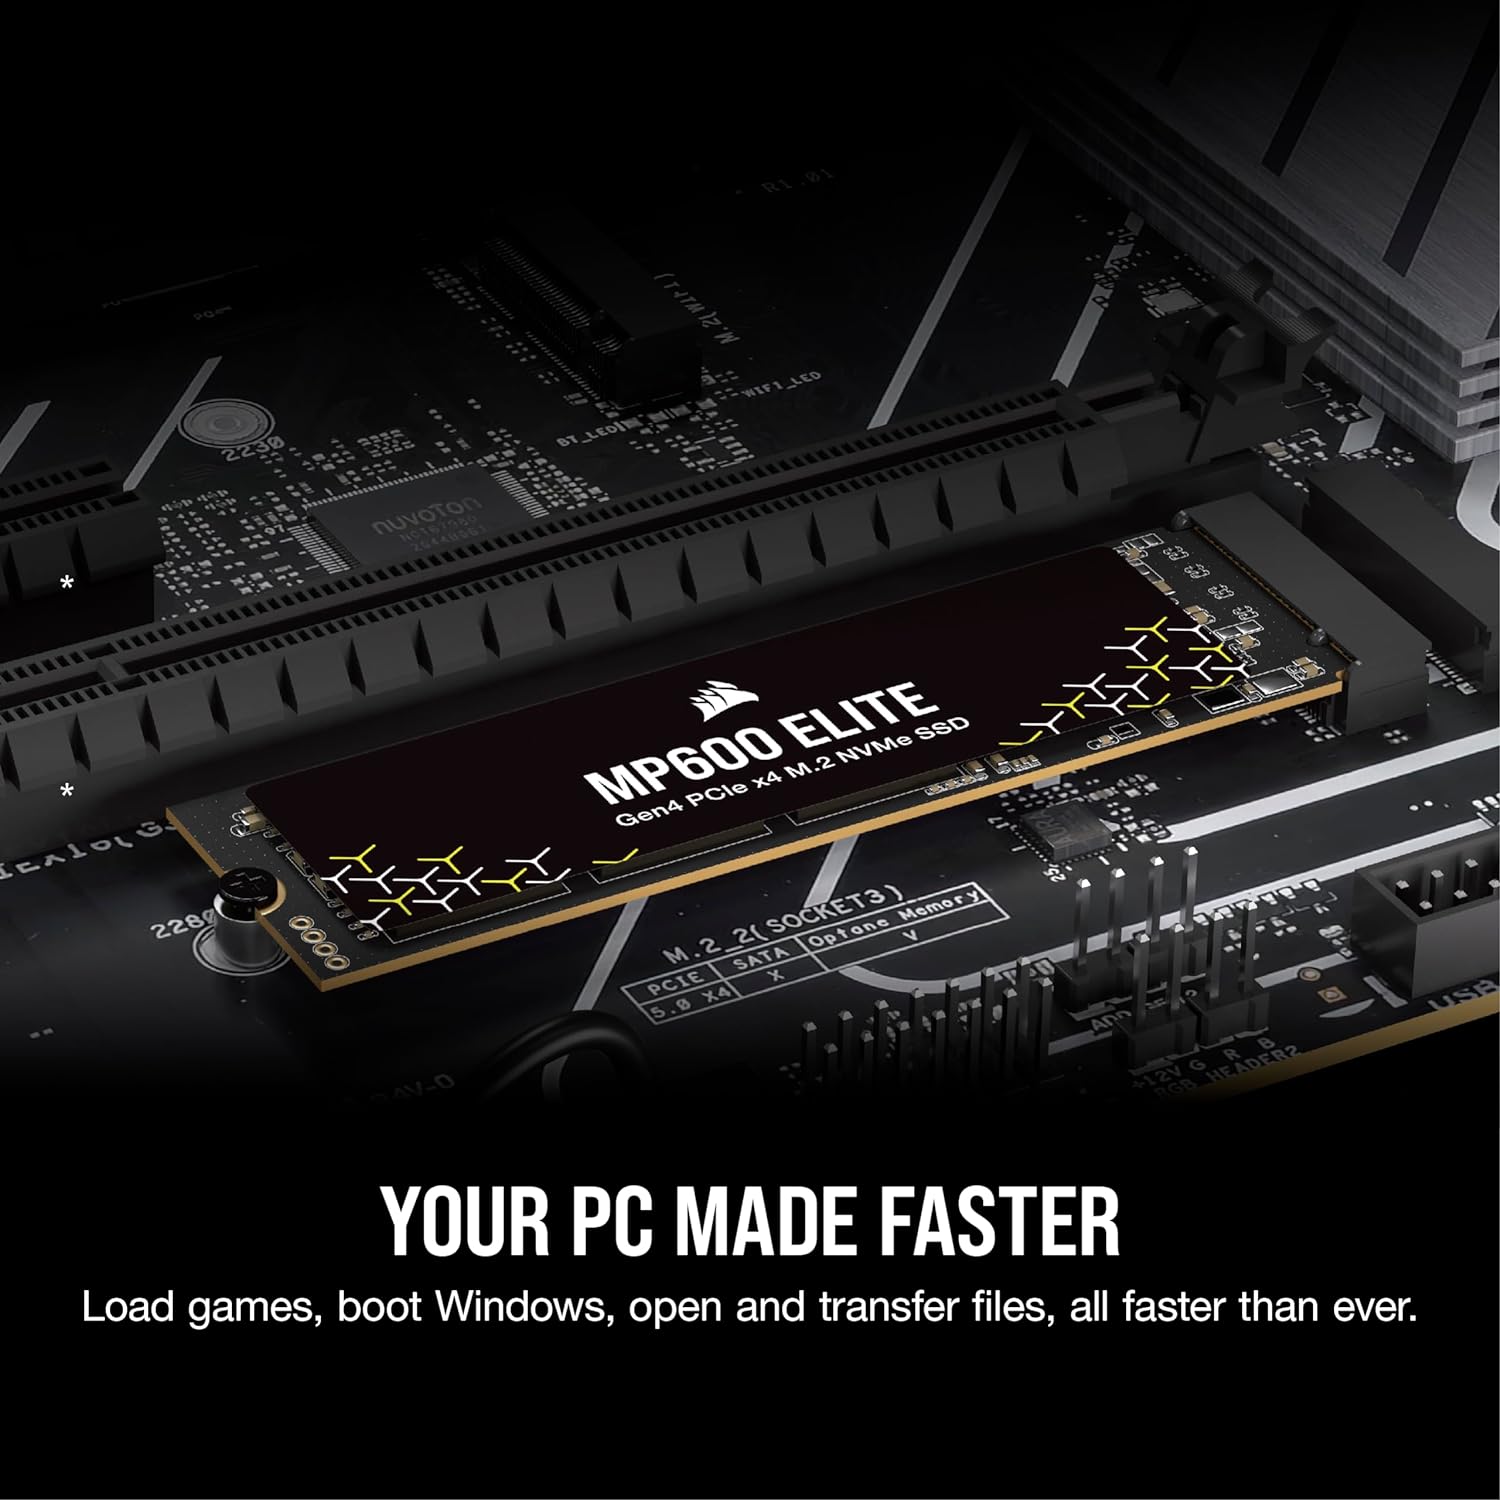 Corsair MP600 Elite 1TB M.2 PCIe Gen4 x4 NVMe SSD – M.2 2280 – Up to 7,000MB/sec Sequential Read – High-Density 3D TLC NAND – Black